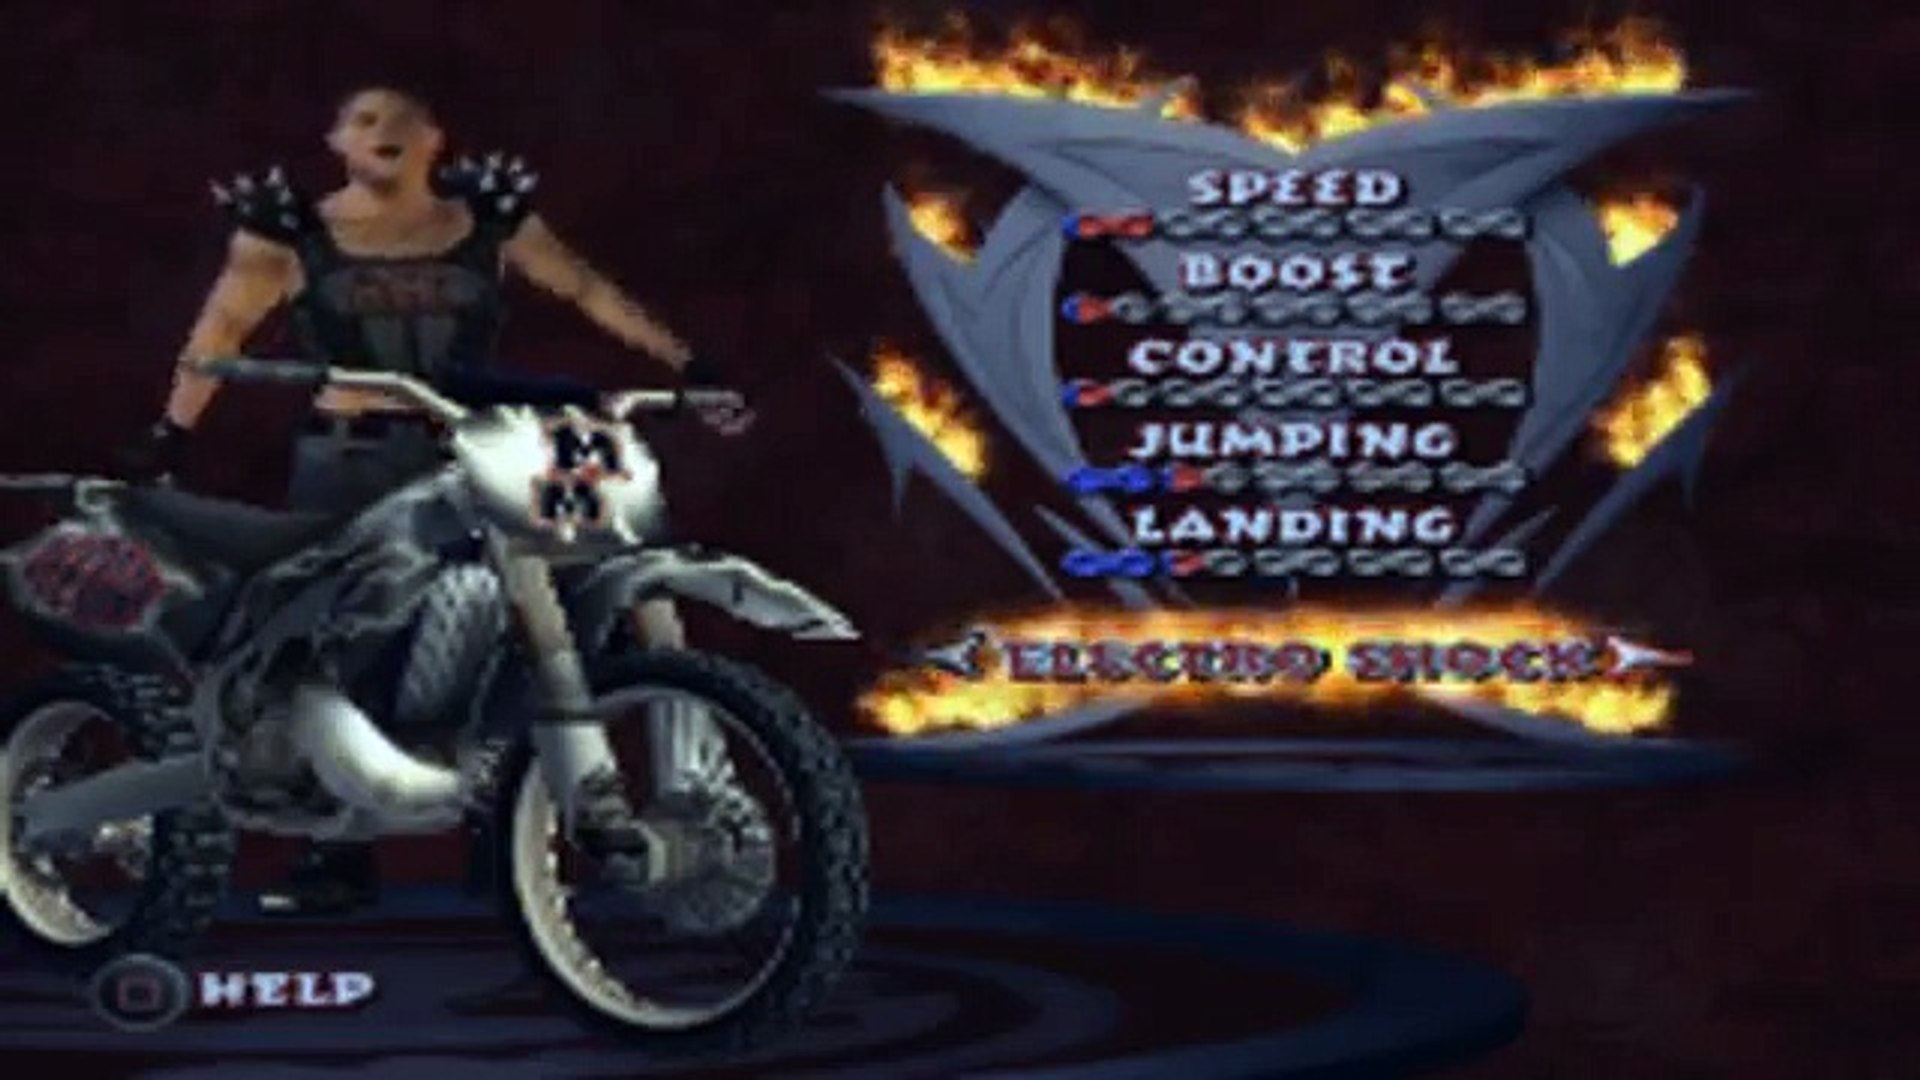 🔴Freekstyle Super Jogo de Moto - Manobras Freekstyle - Motocross